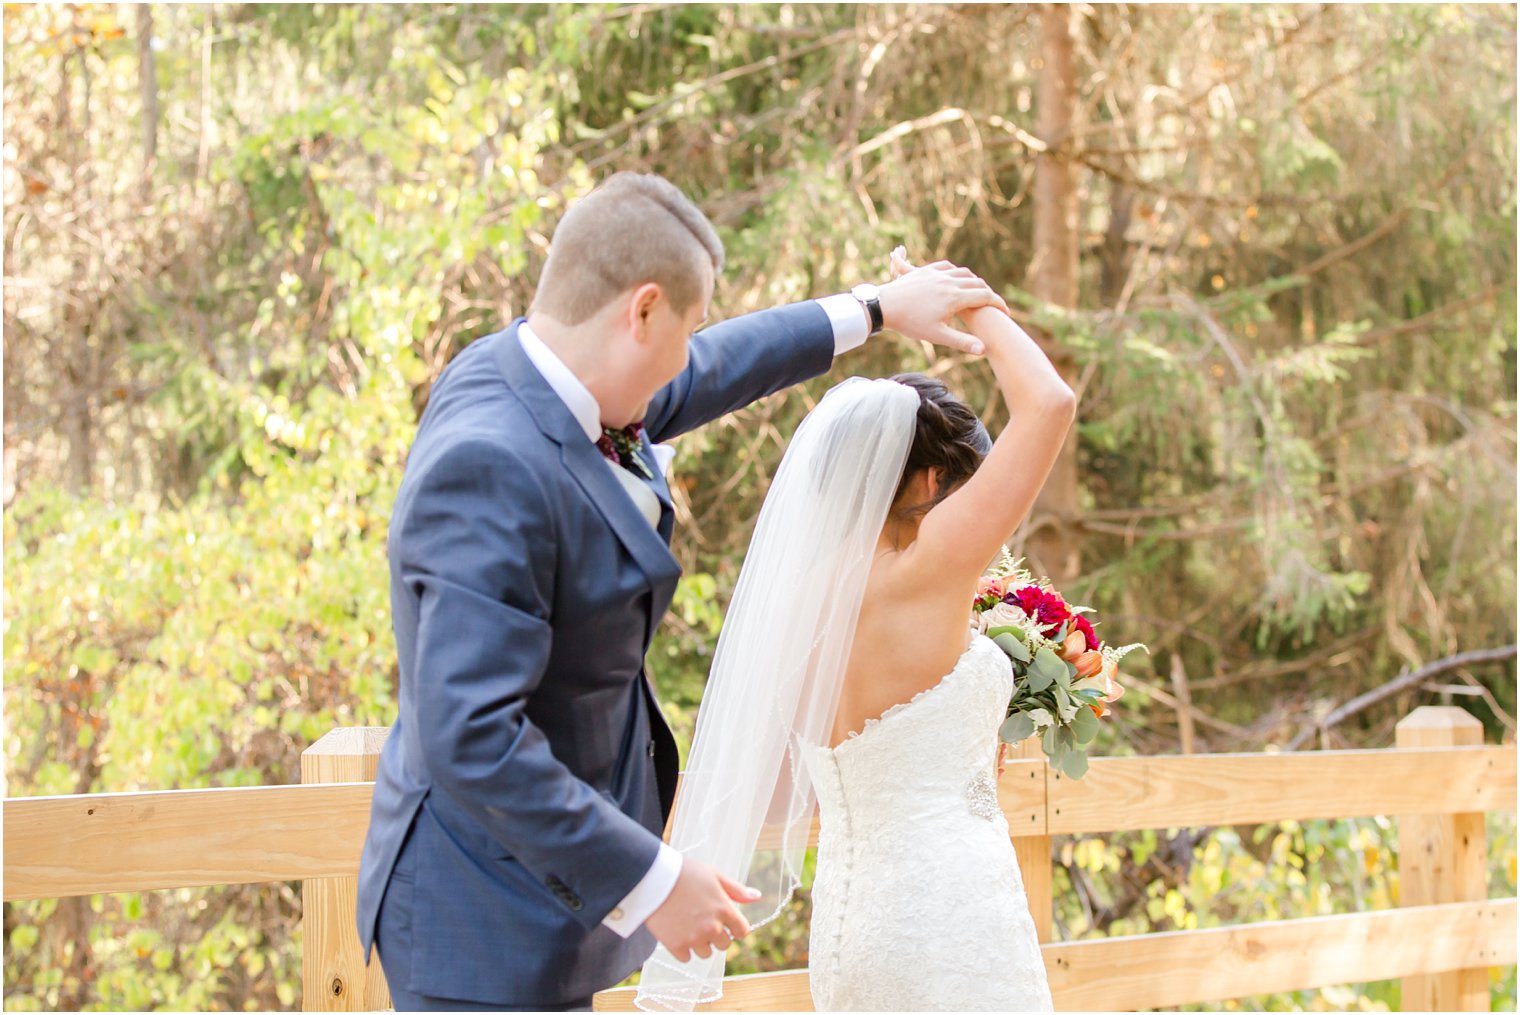 Groom twirling bride on their wedding day | Photos by NJ Wedding Photographers Idalia Photography